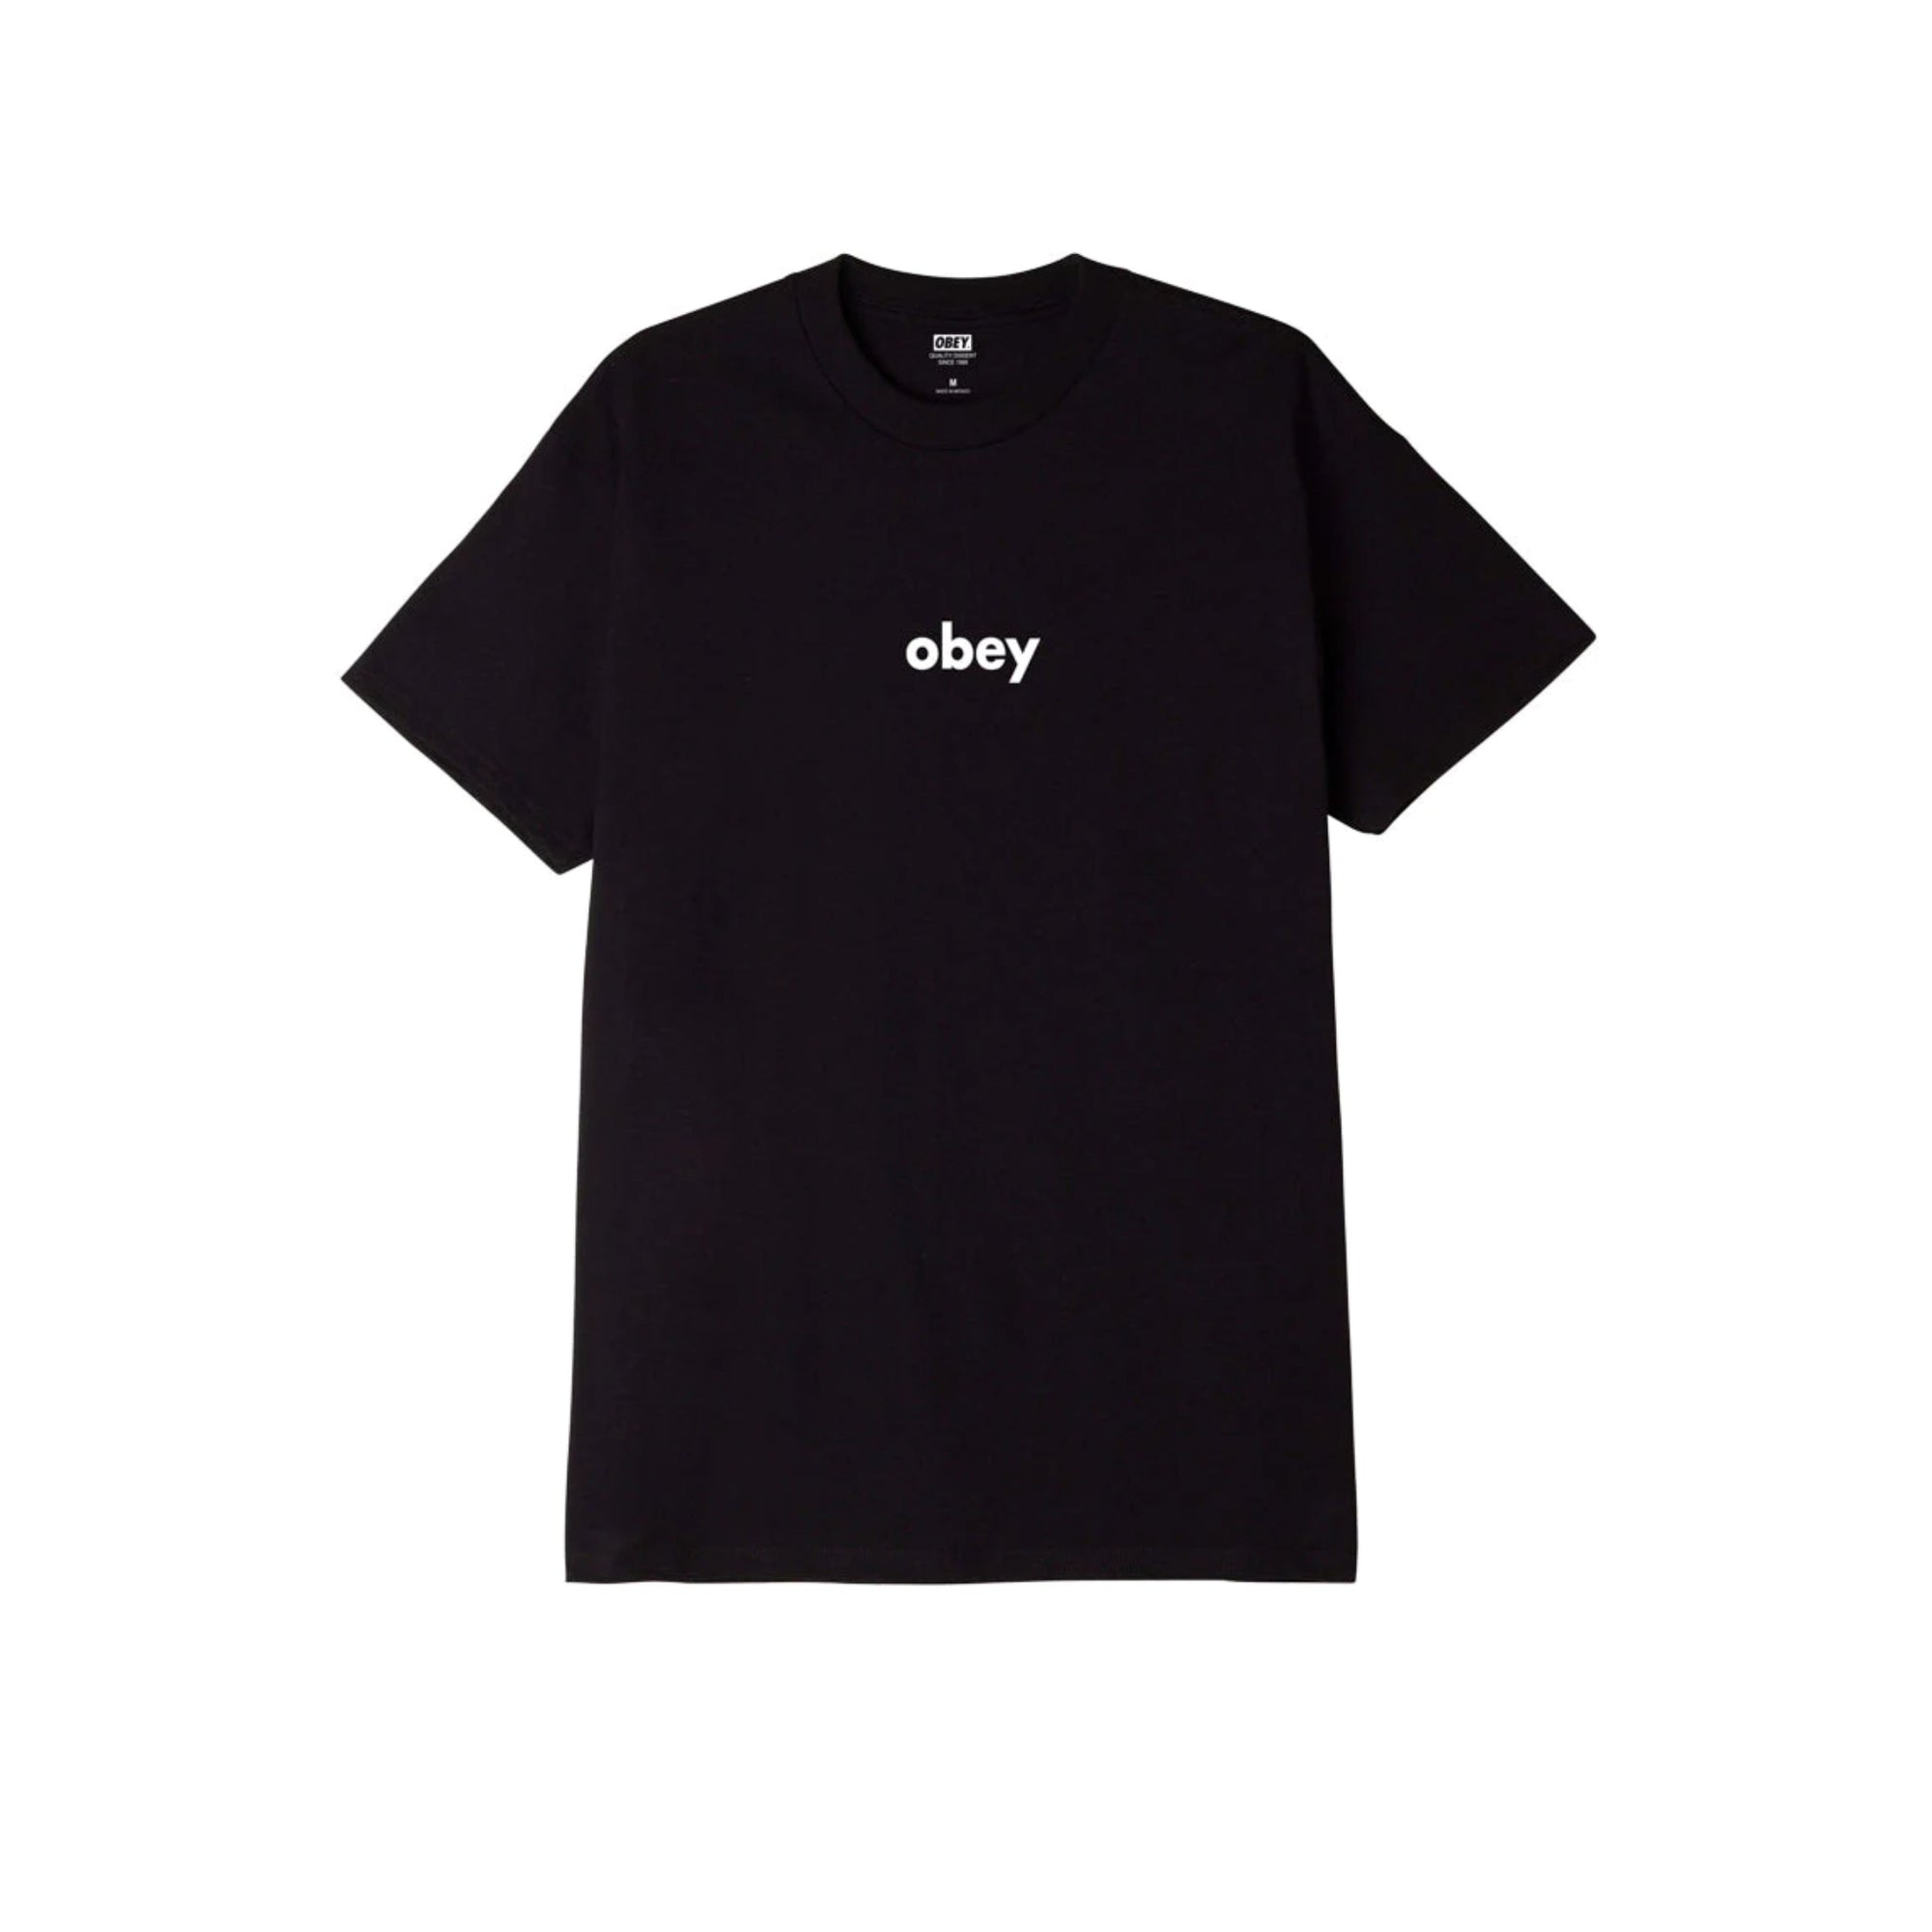 Obey Lower Case T-Shirt - Black